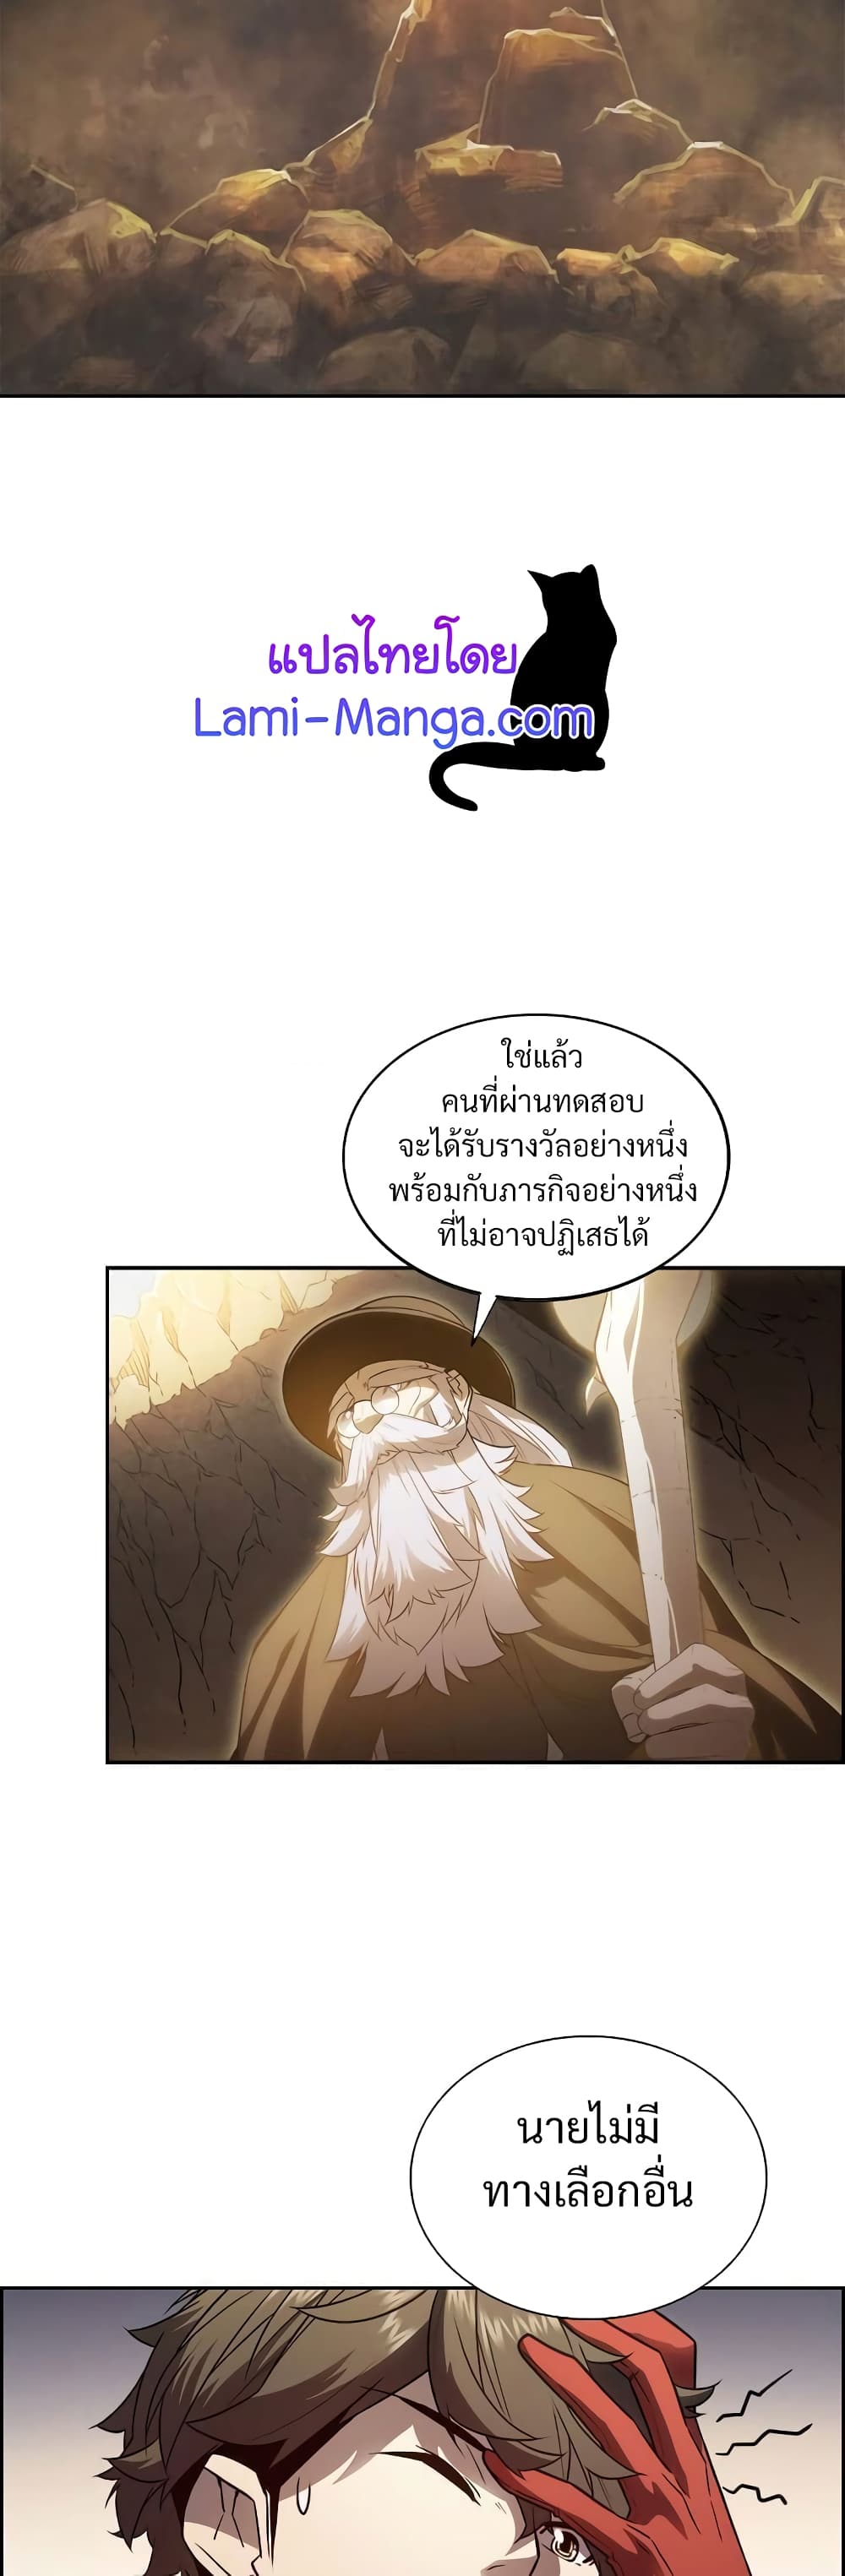 Taming Master 23 แปลไทย